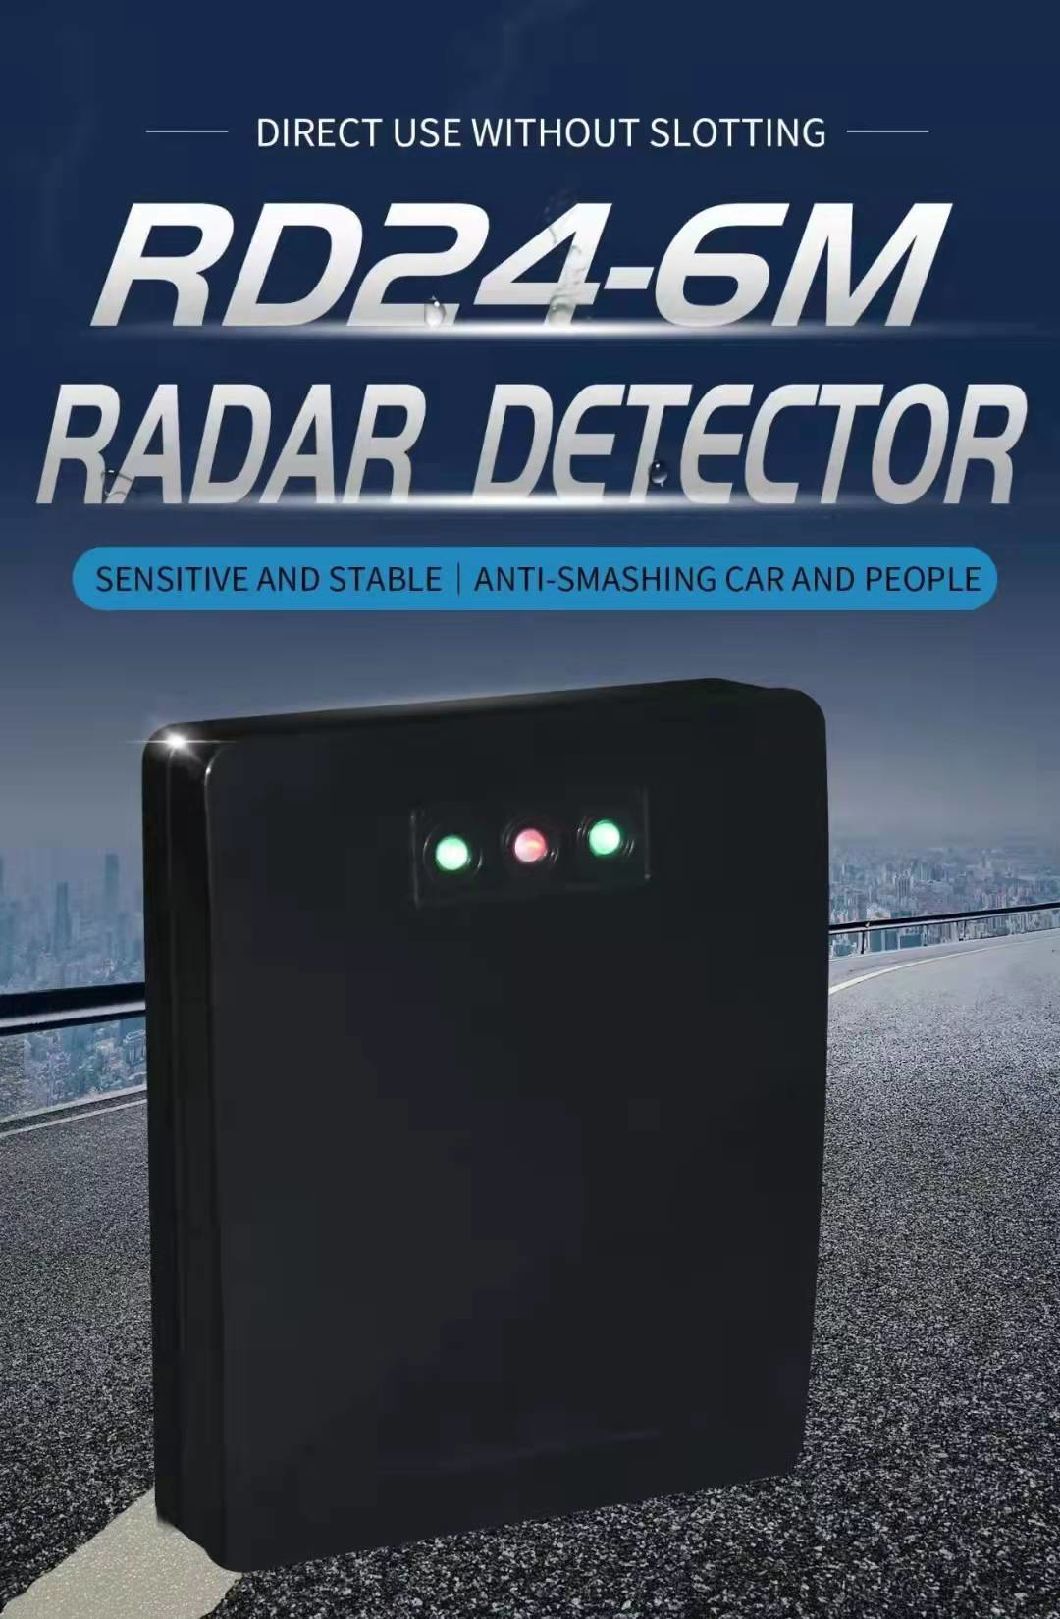 Radar Sensor Parking Entry Boom Barrier Radar Detector / Barrier Gate Safety Radar